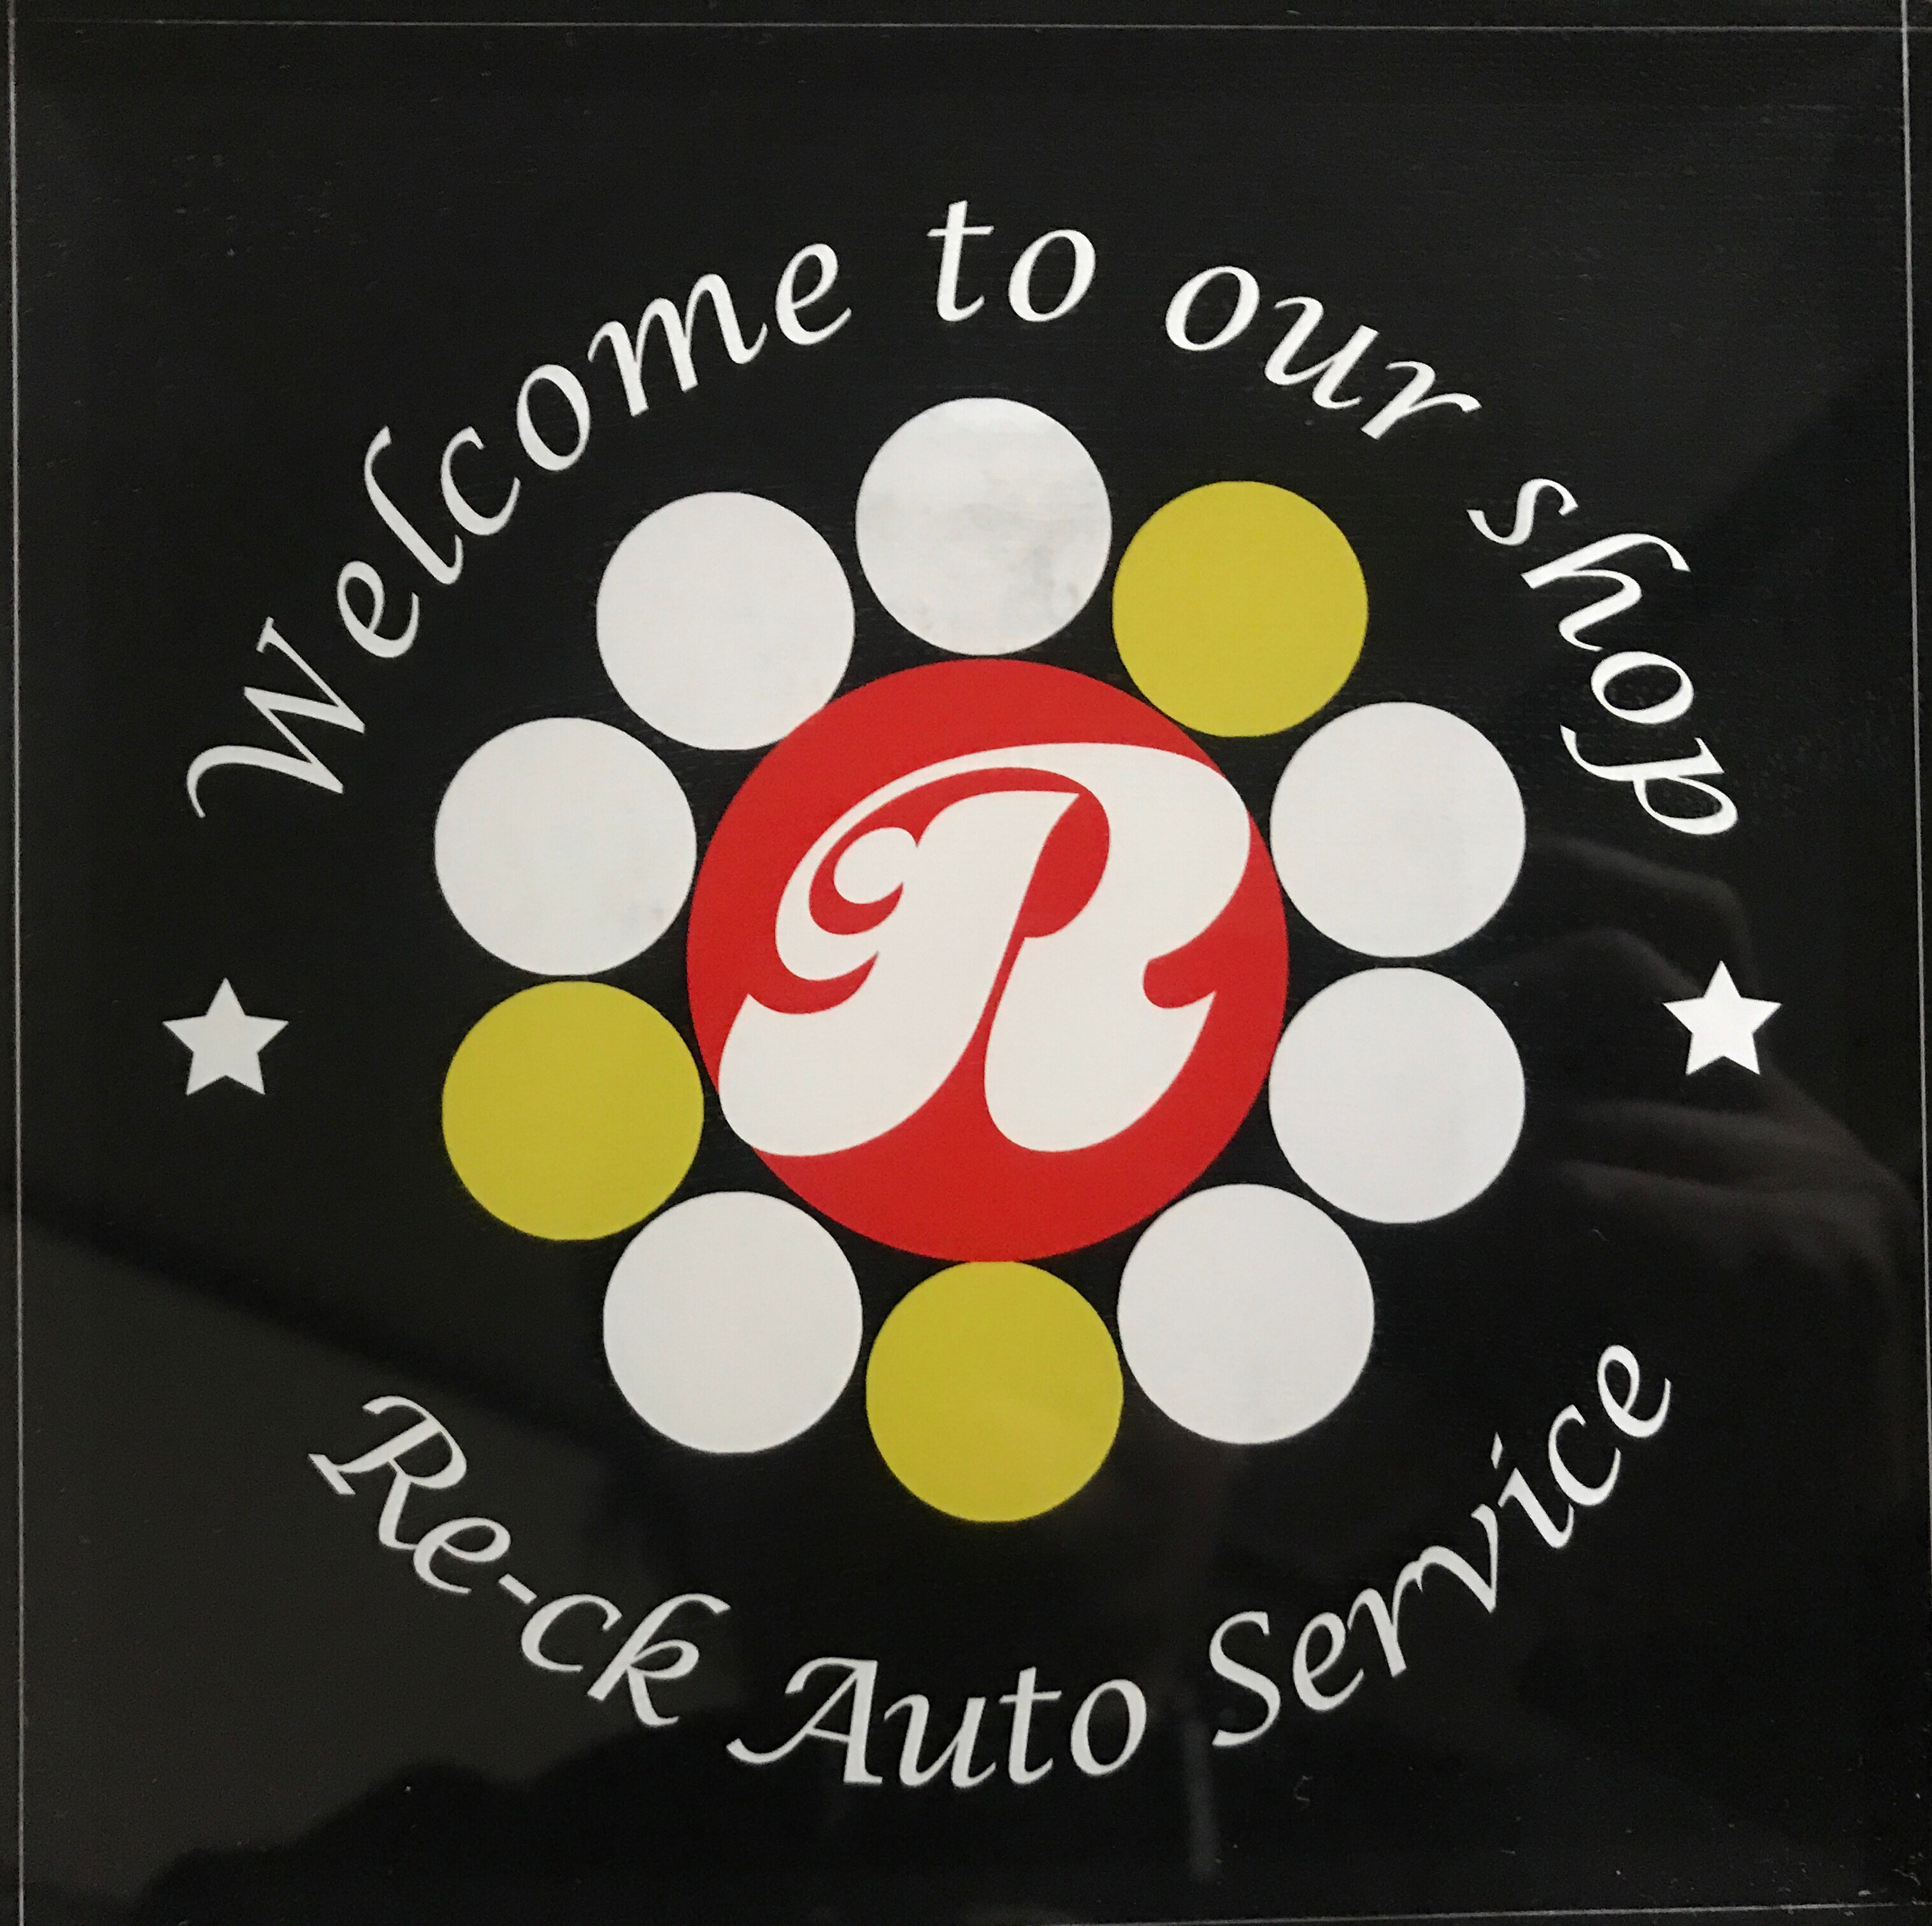 Re-ck Auto Service